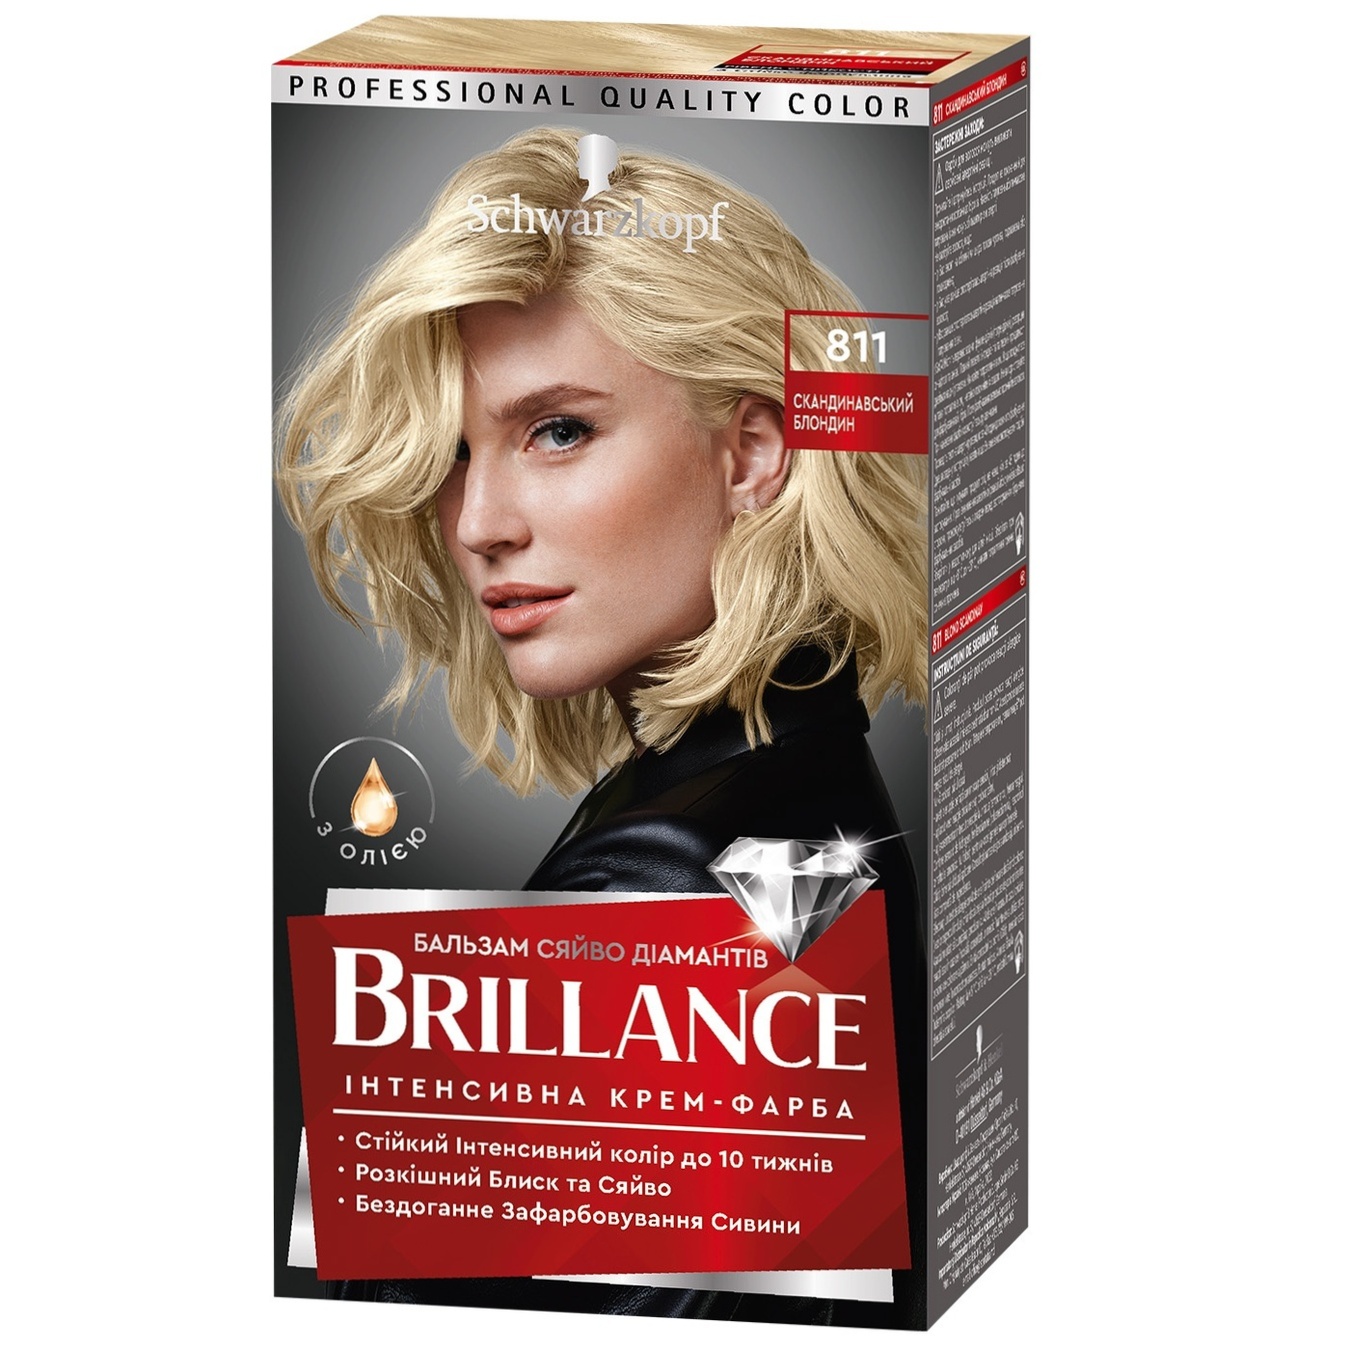 Hair dye Brillance Scandinavian Blonde 811